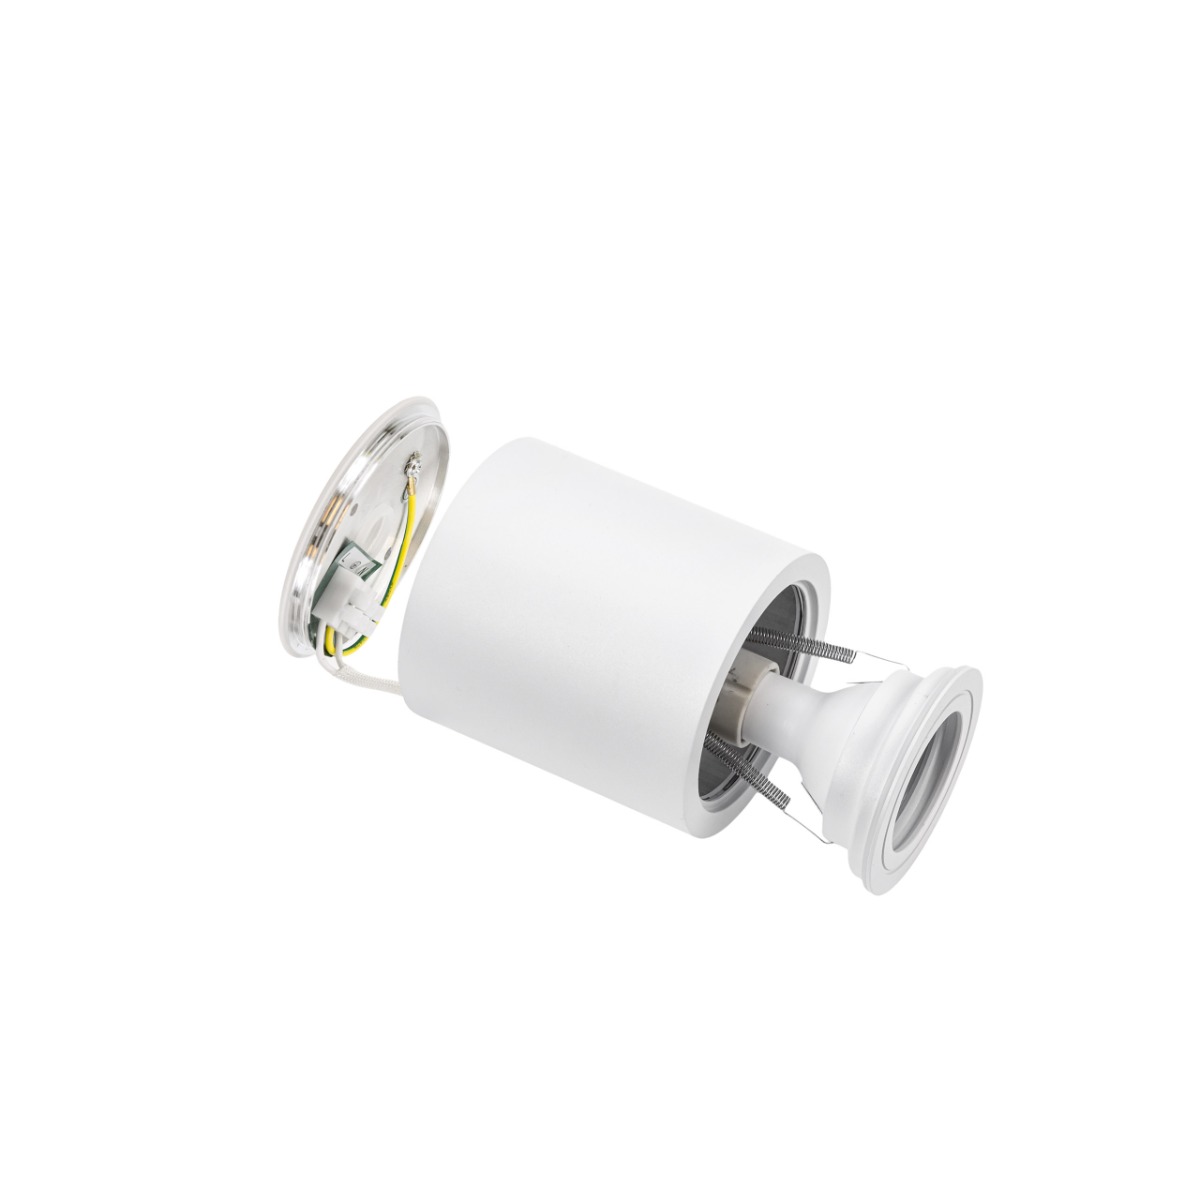 LED Spot GU10 Socket Surface-Mounted Round IP65 White 